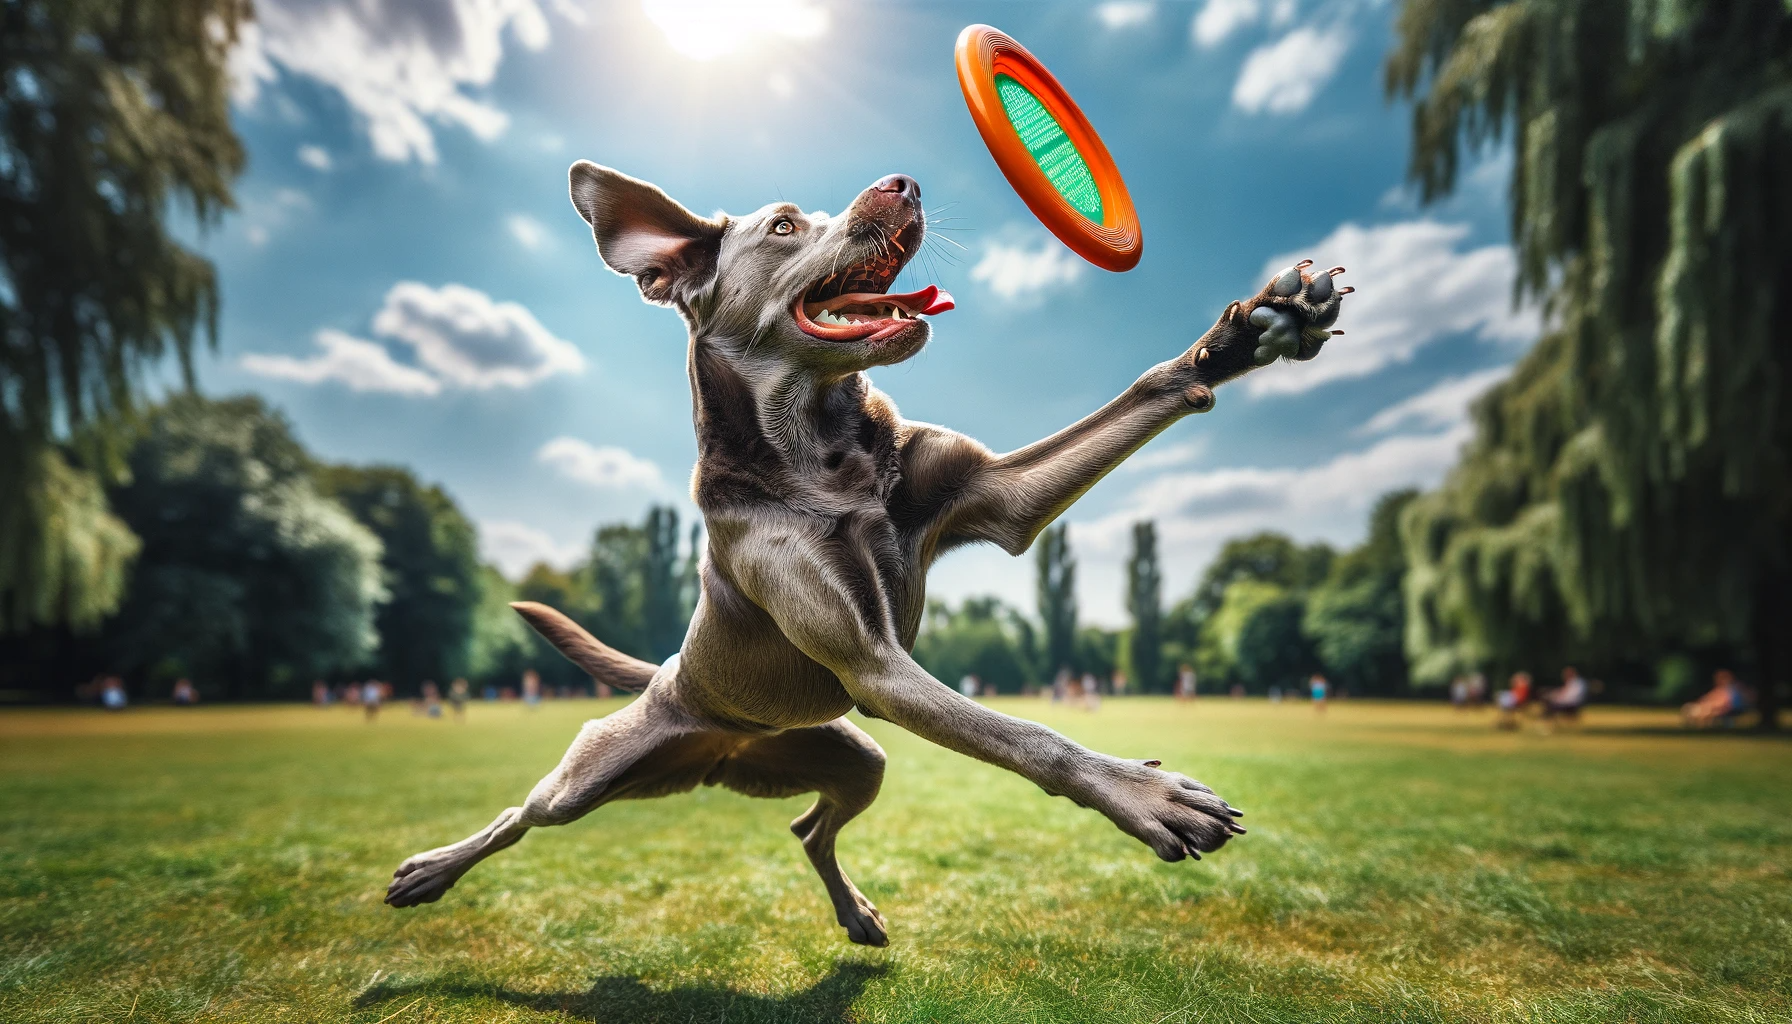 Labmaraner captured mid-air gleefully catching a frisbee